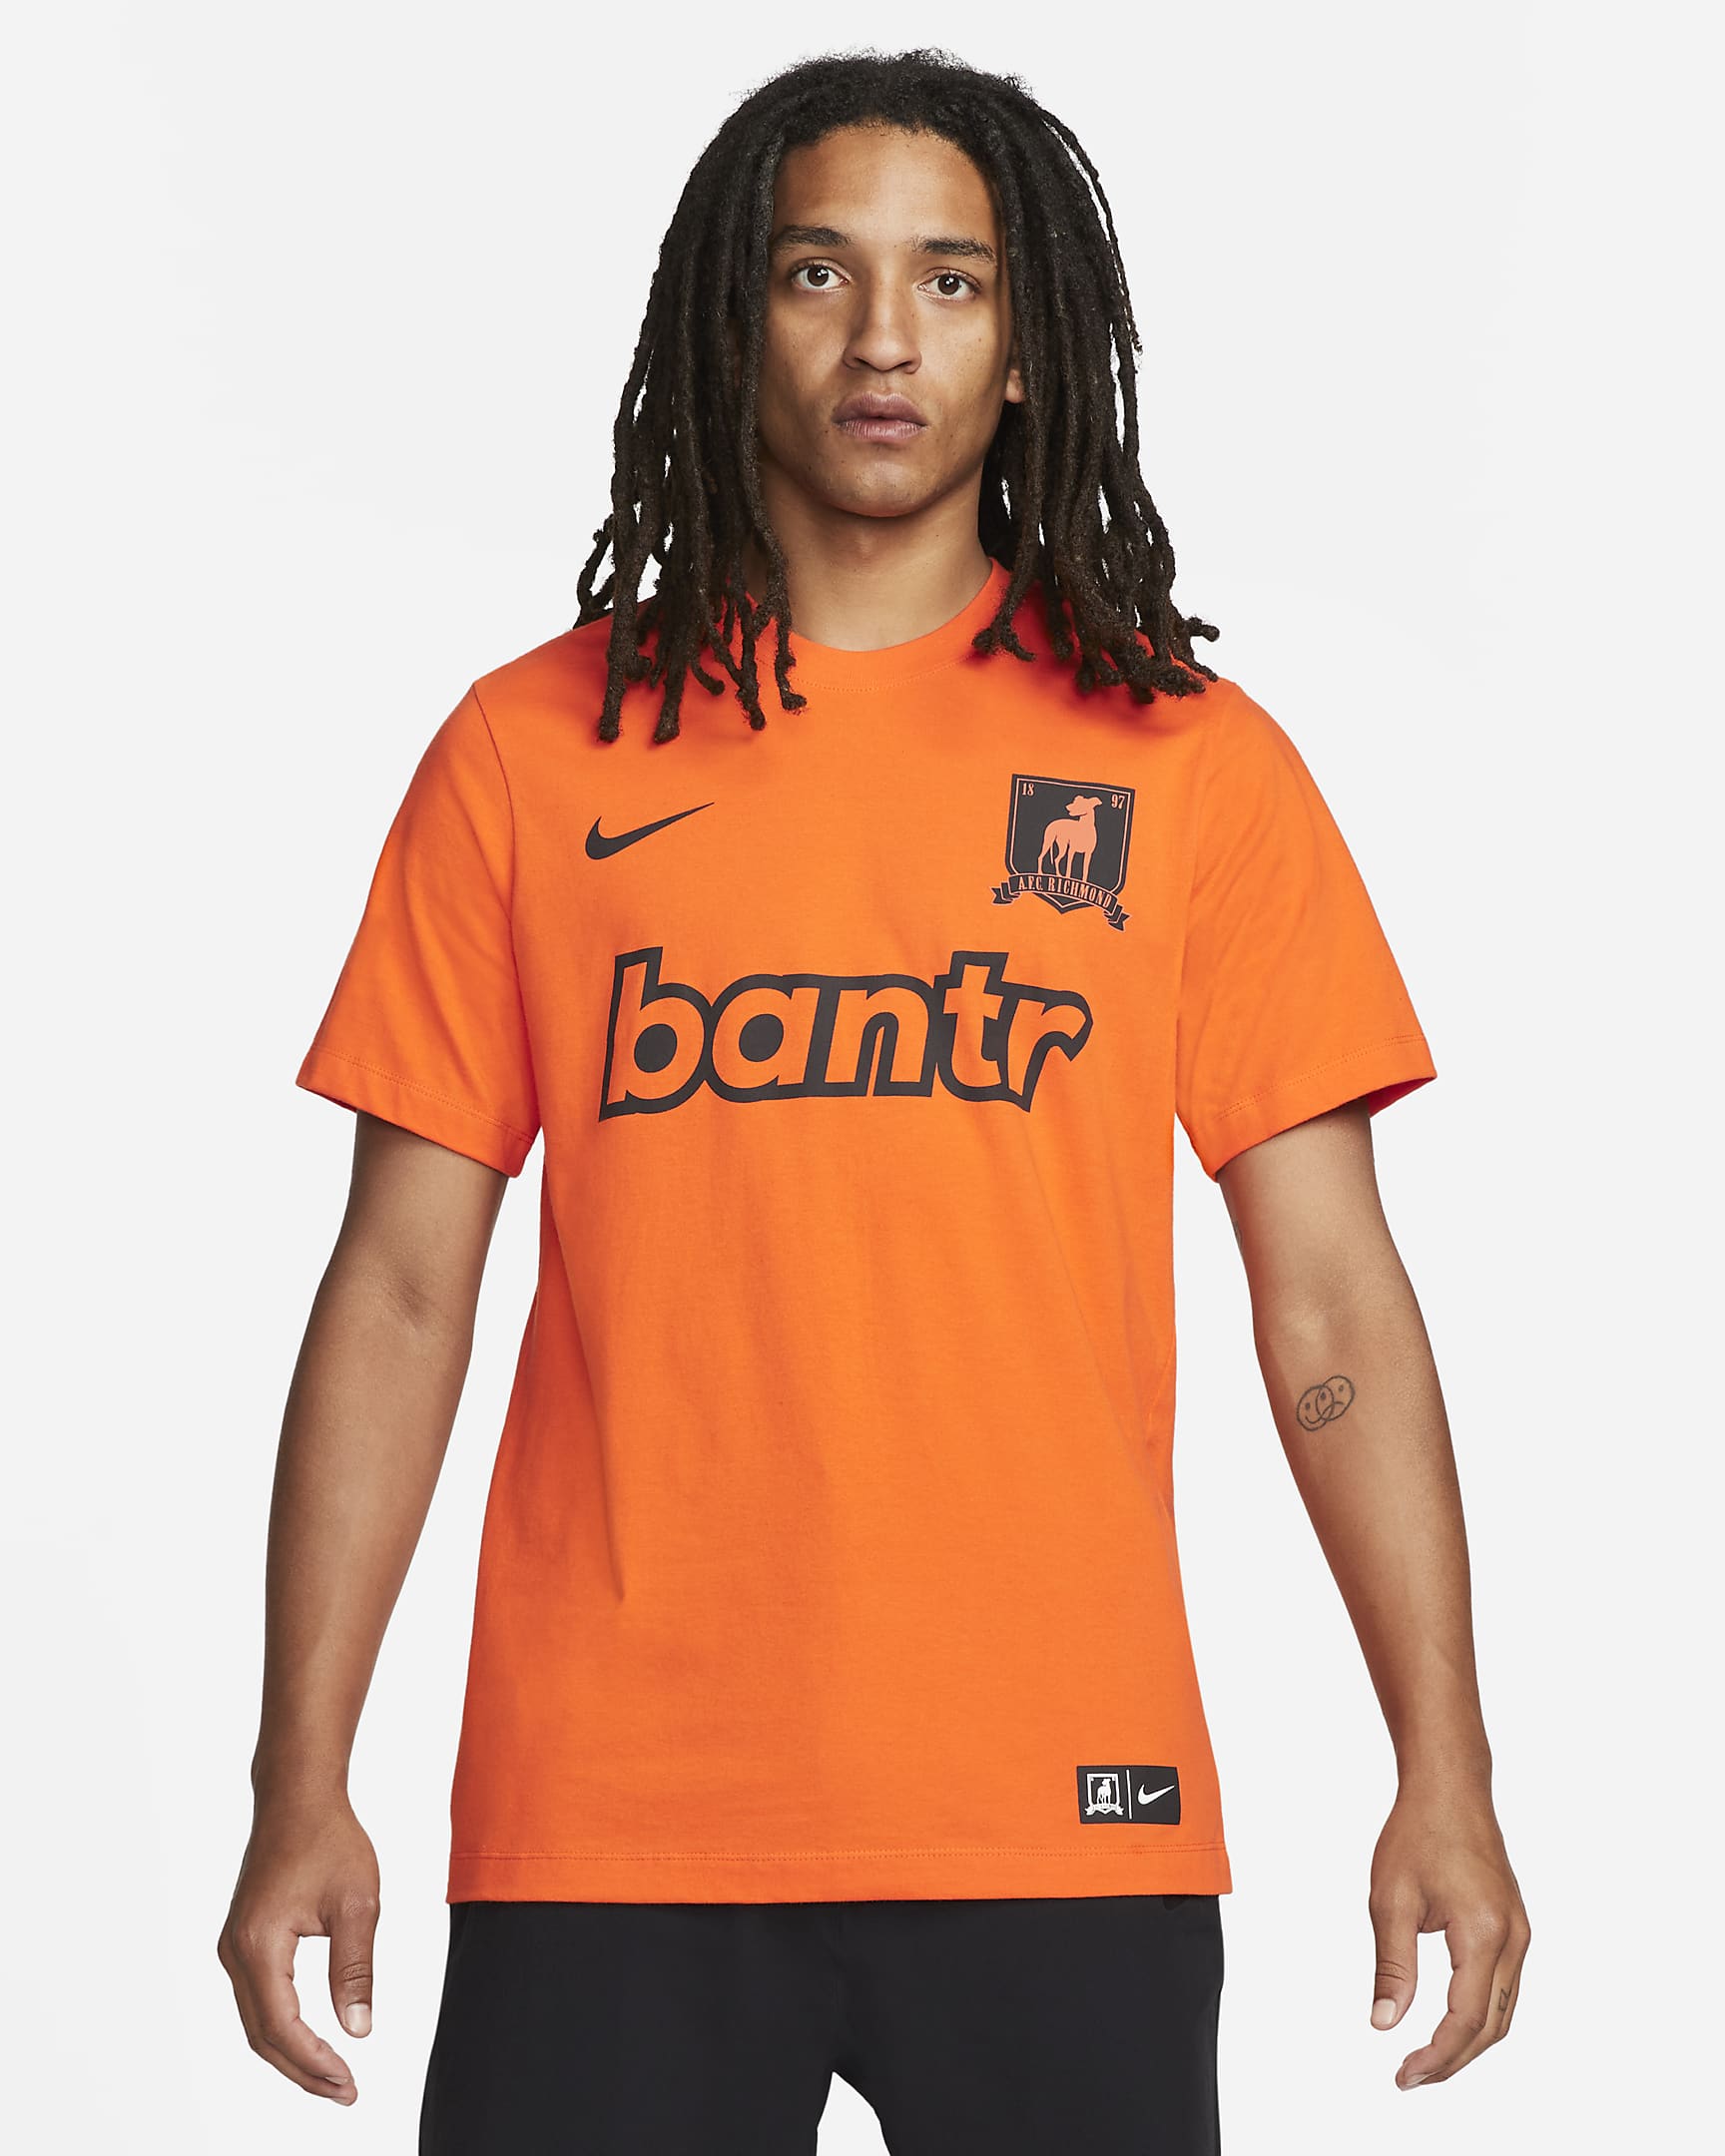 AFC Richmond 2023 Nike Bantr T-Shirt - Safety Orange - Football Shirt ...